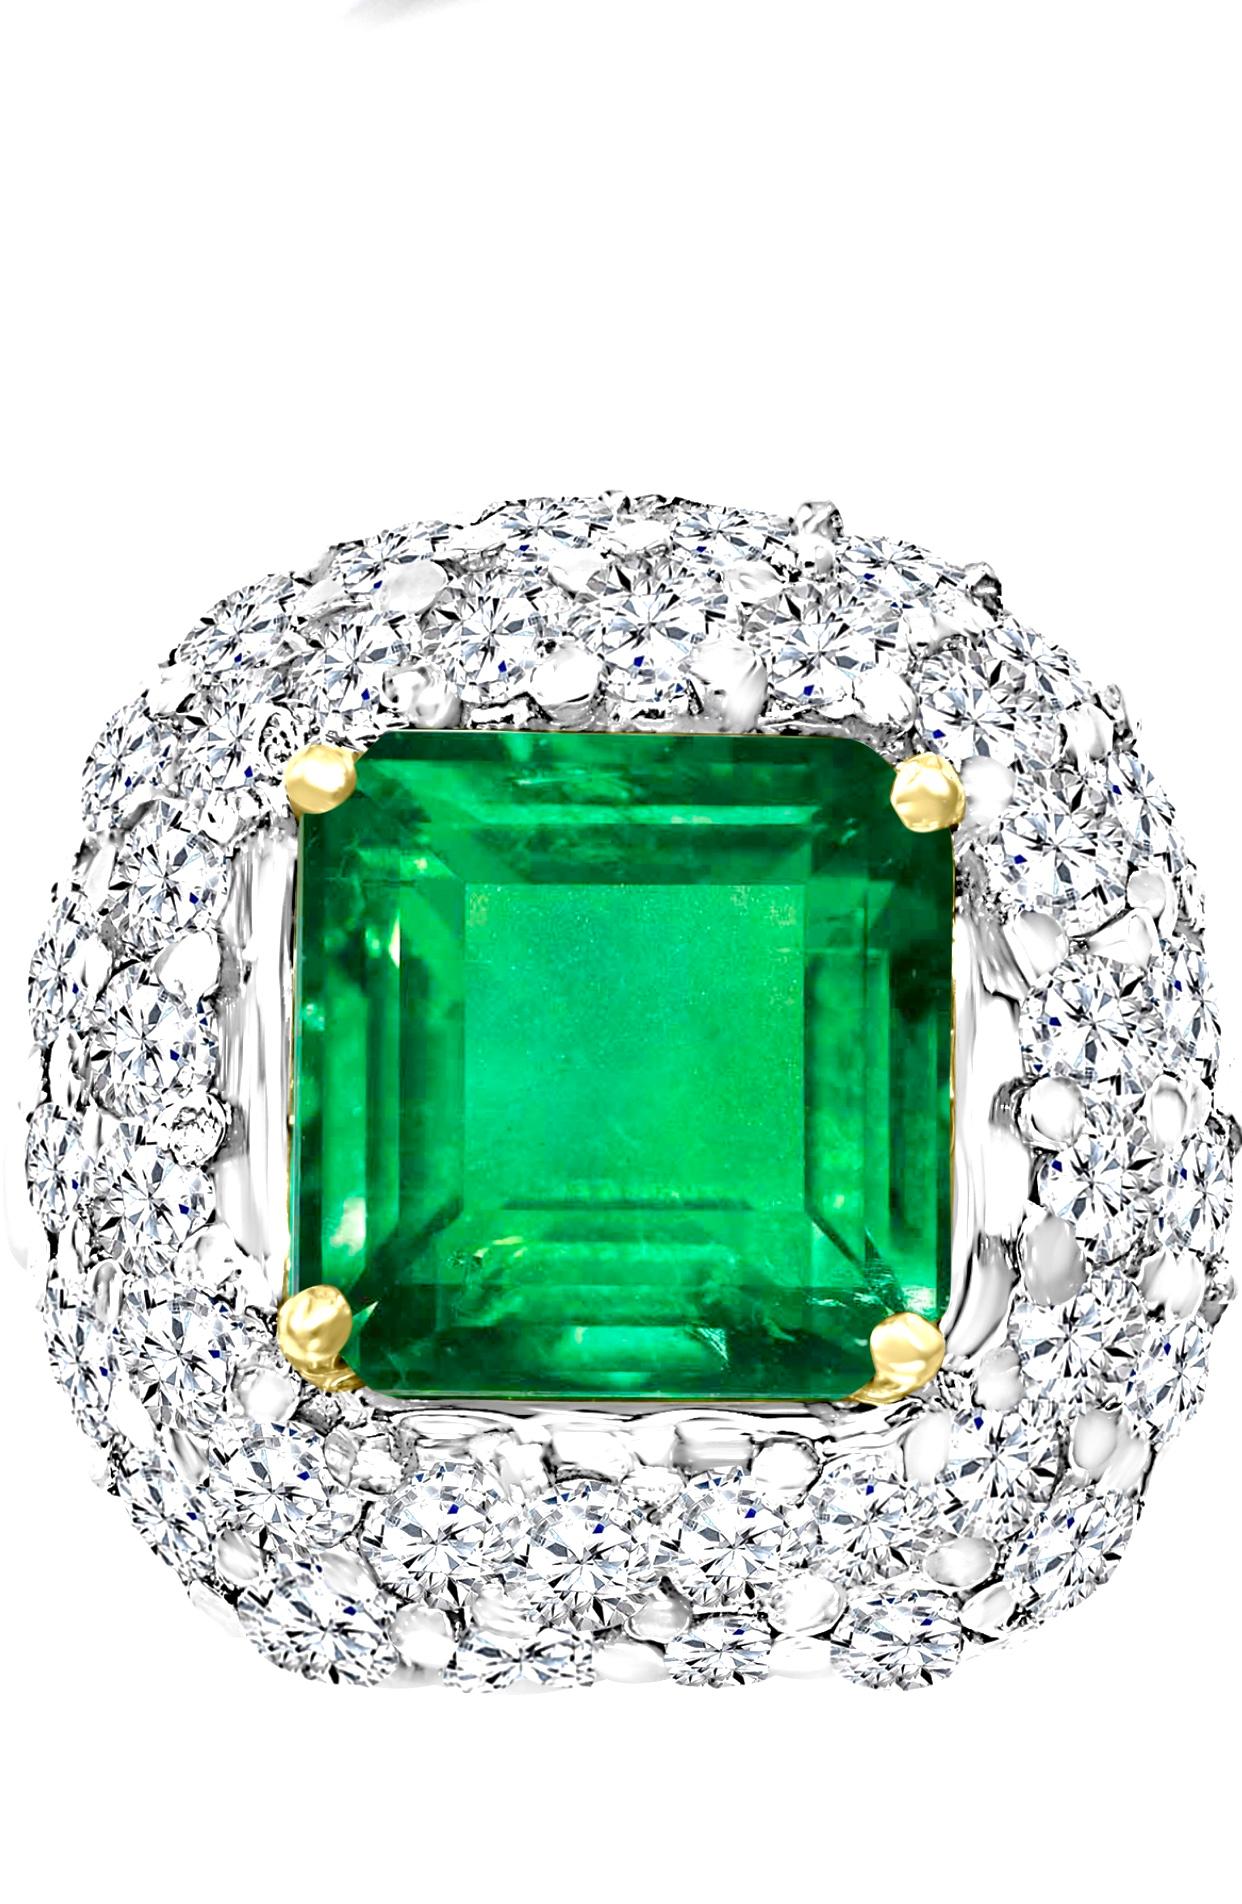 4 carat colombian emerald